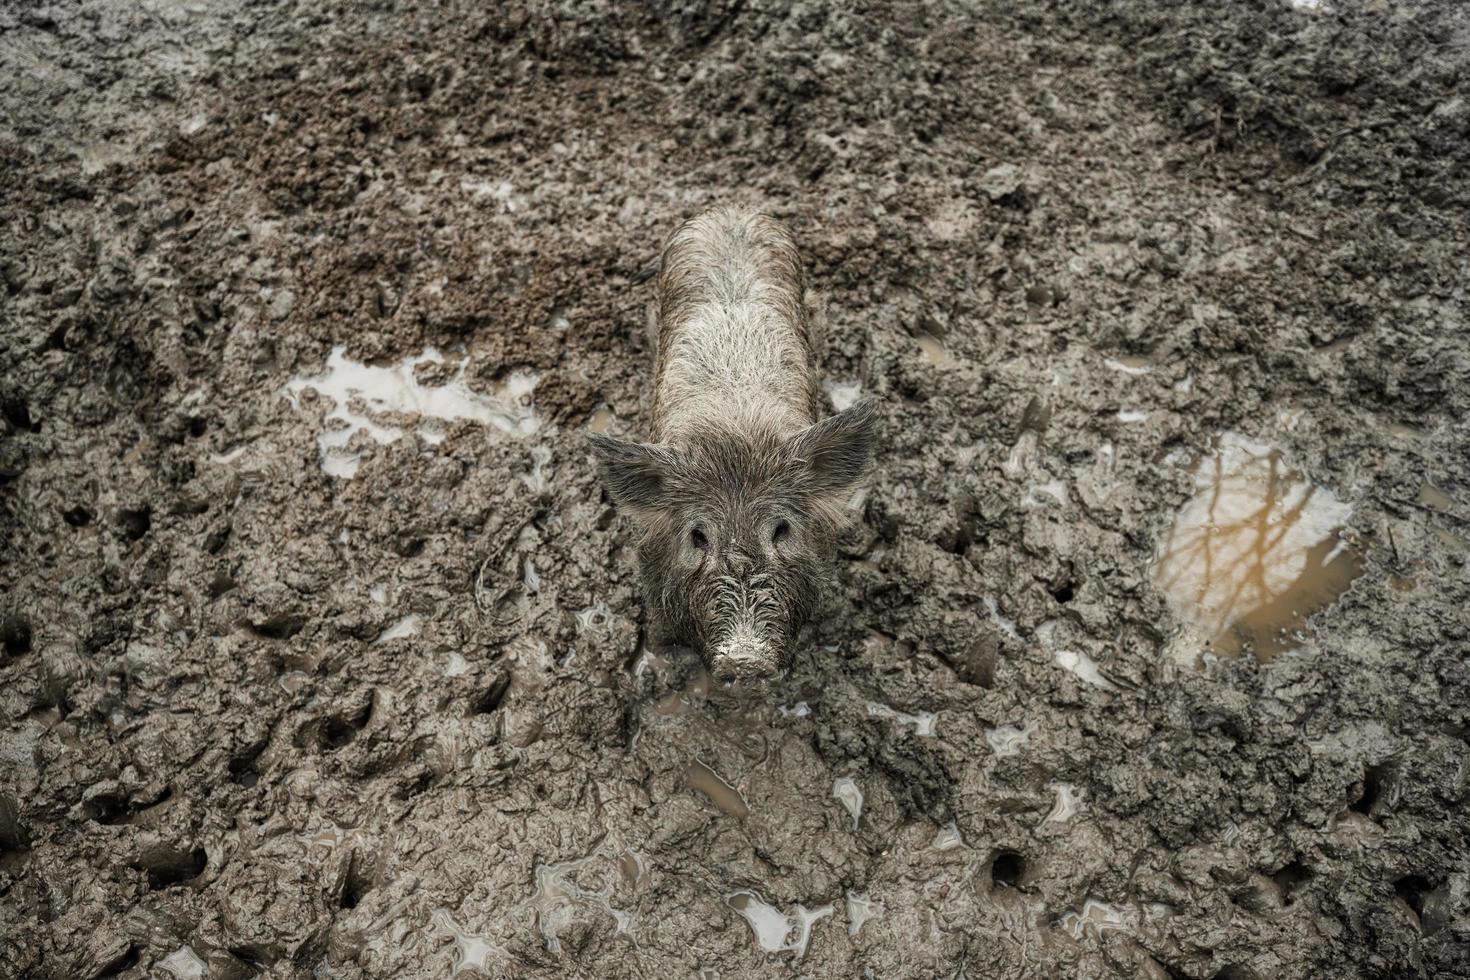 sujo javali selvagem porco dentro a lama. foto